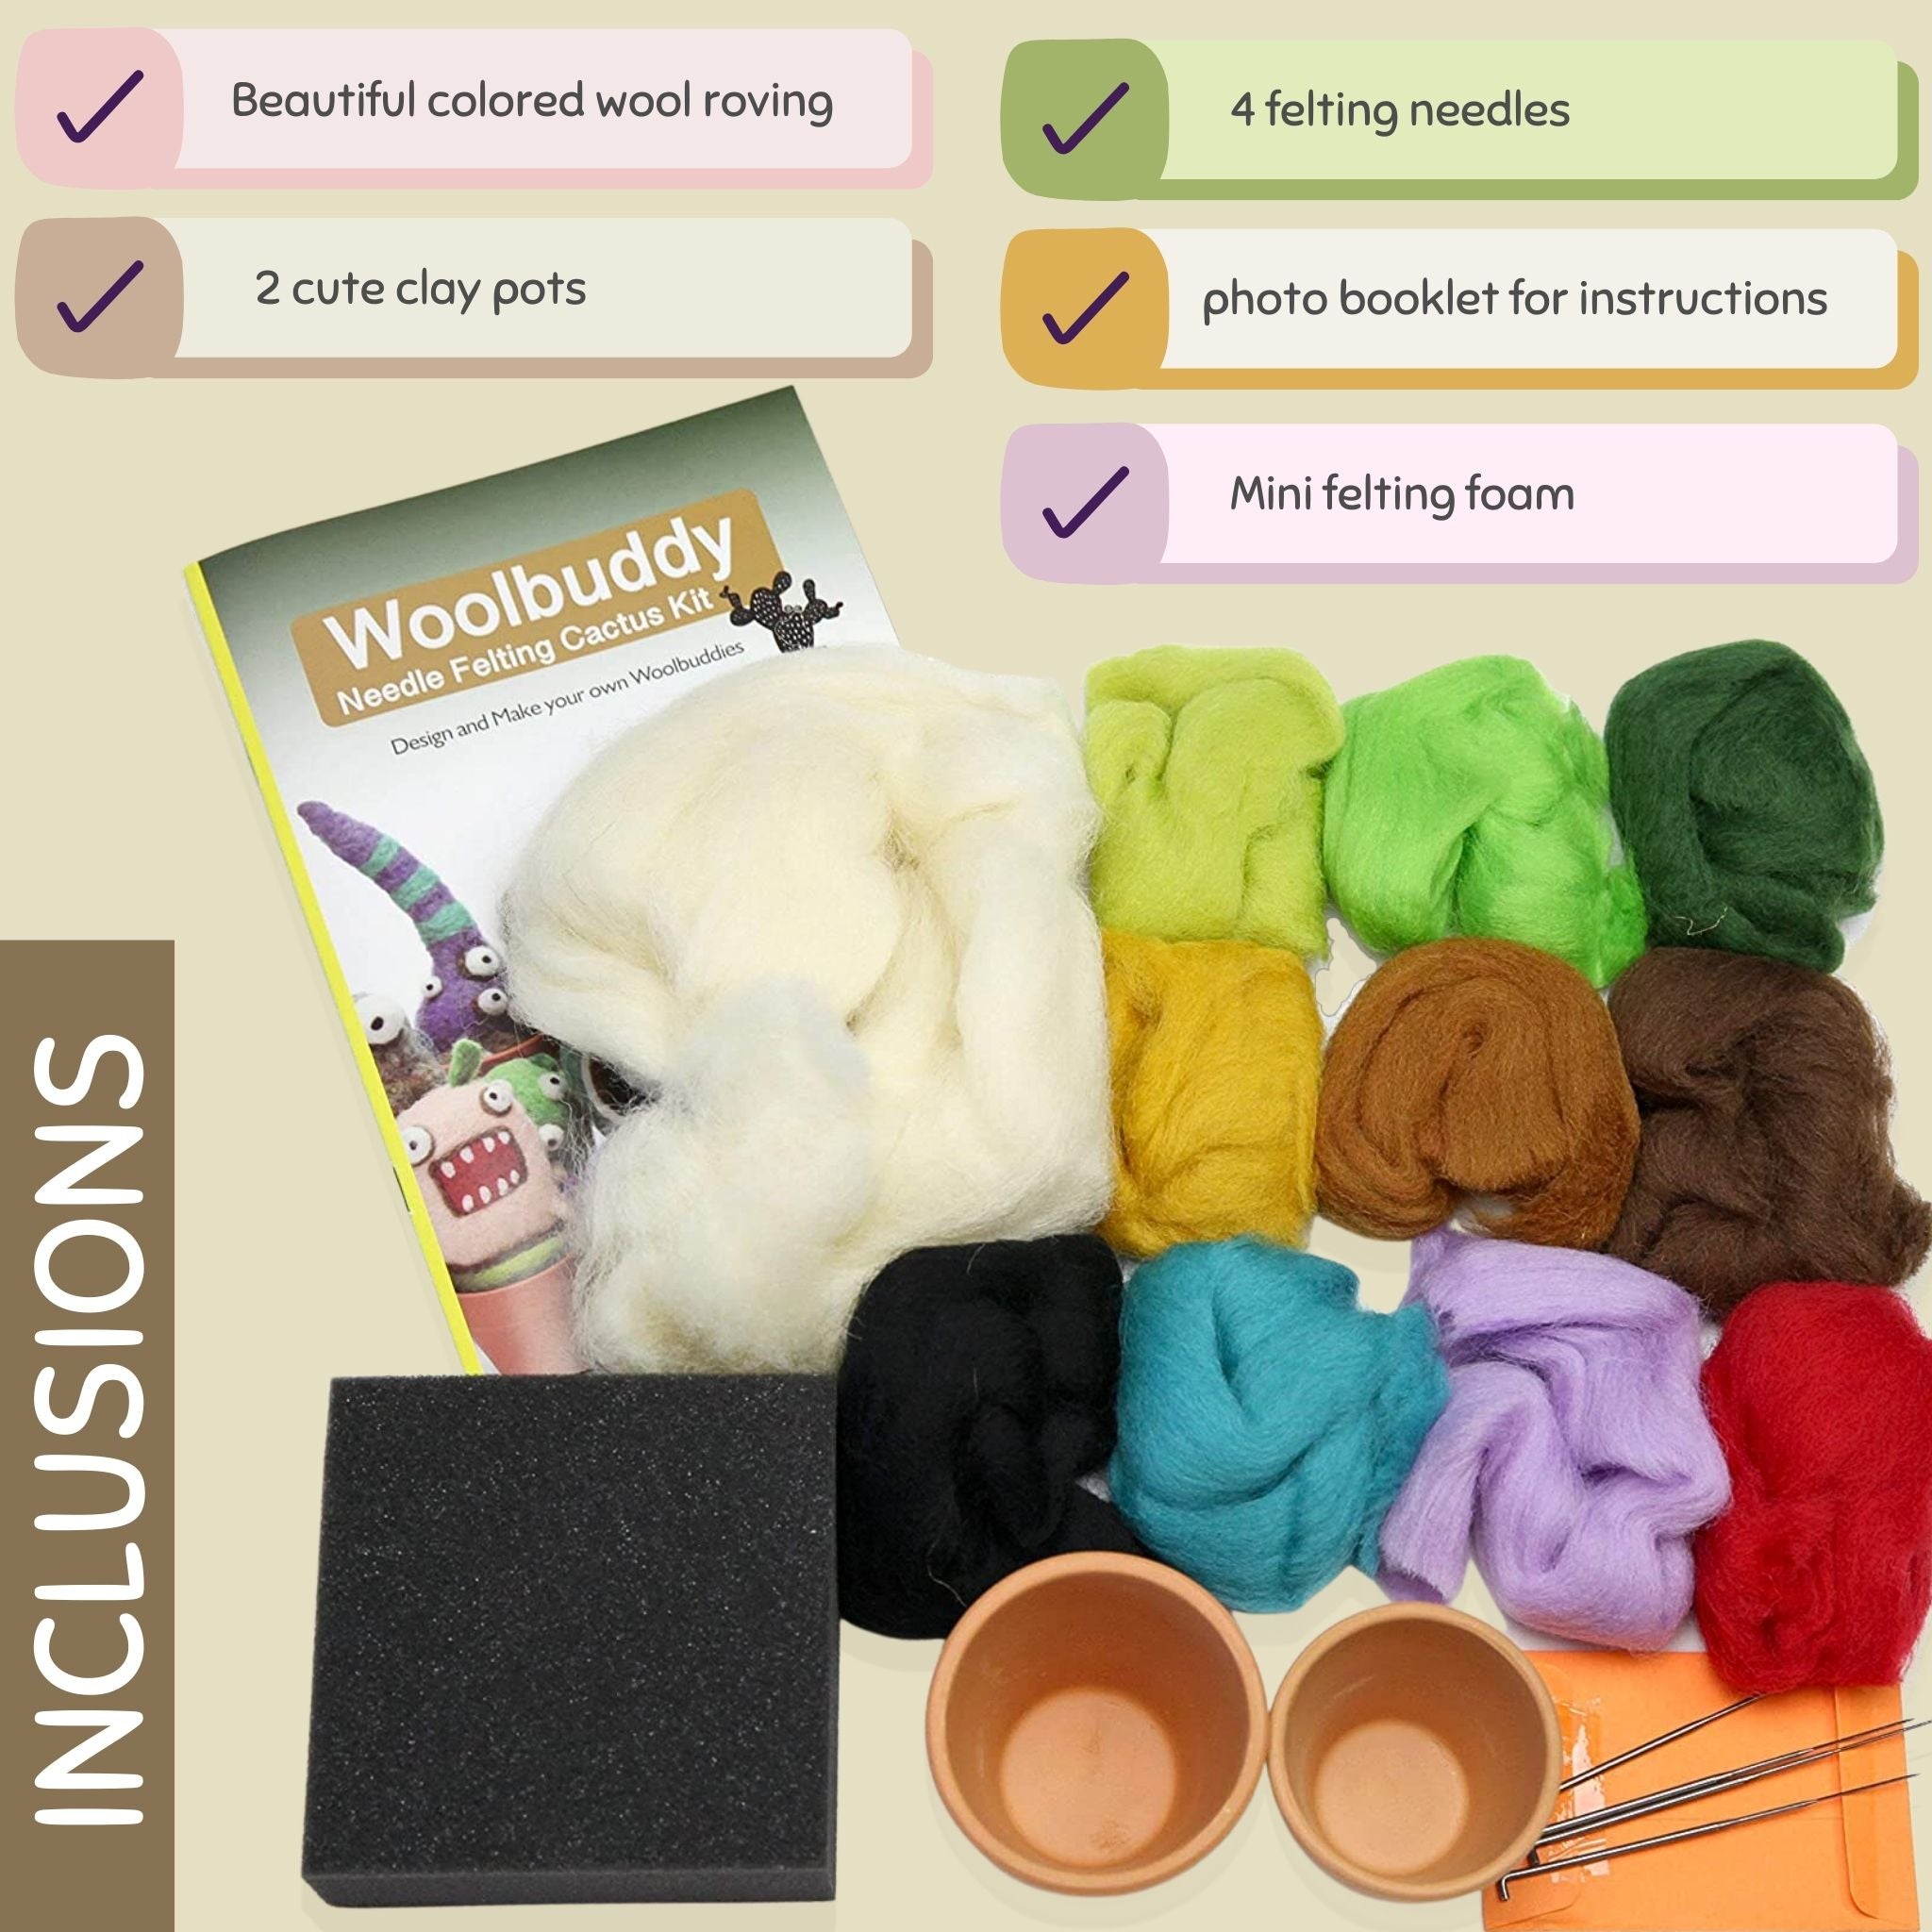 Woolbuddy Green Cactus Monster Wool Felting Kit Crafting Gift J0-4KL1-LS8F